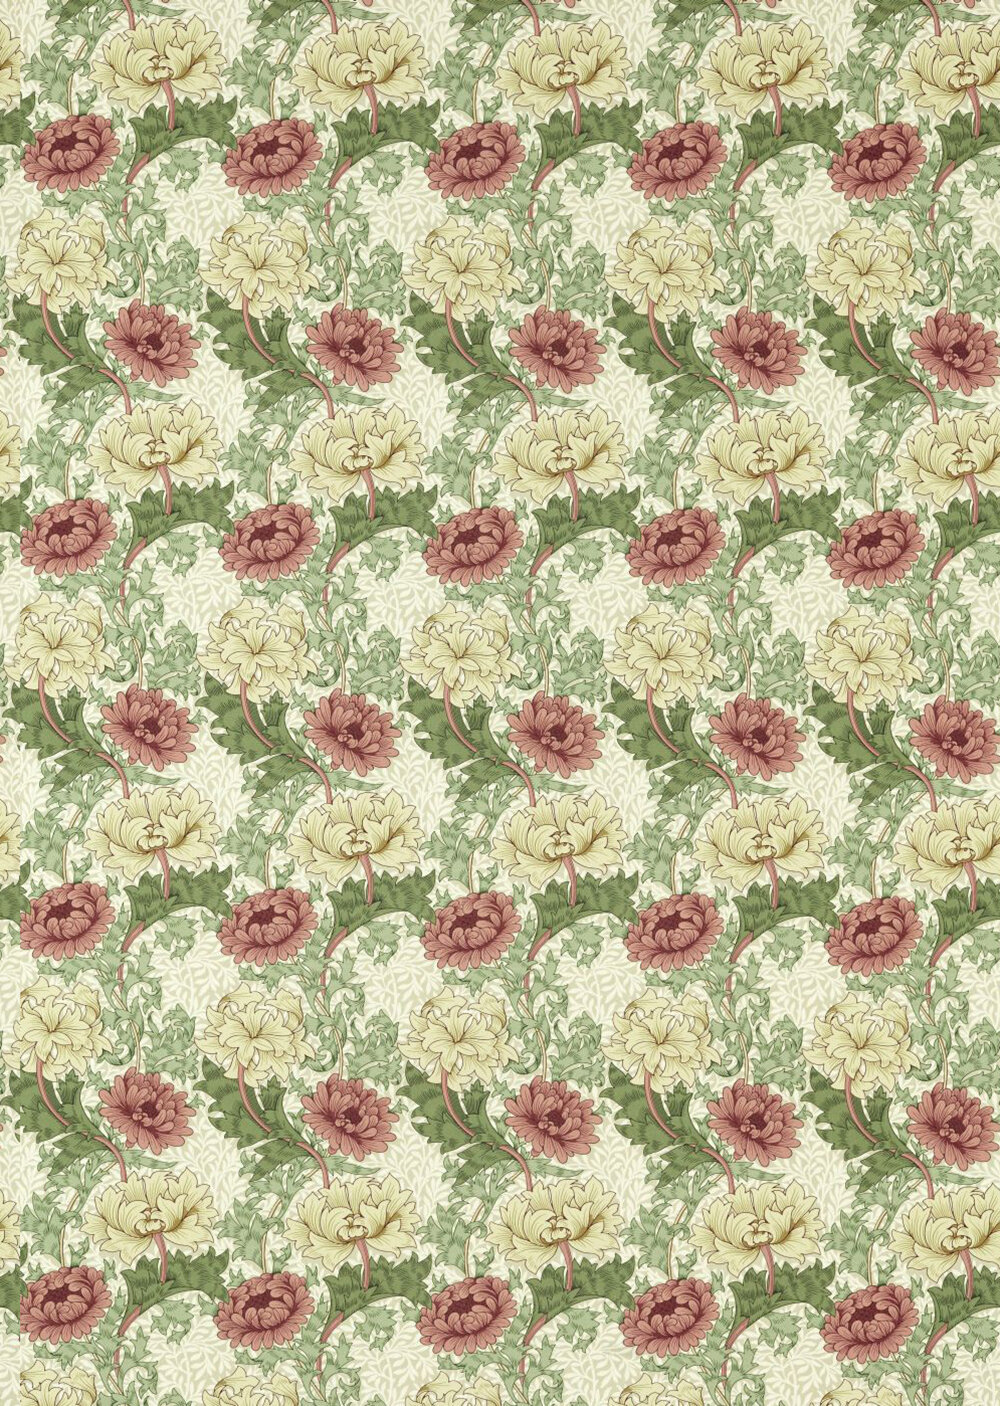 Chrysanthemum Fabric - Russet - by Morris